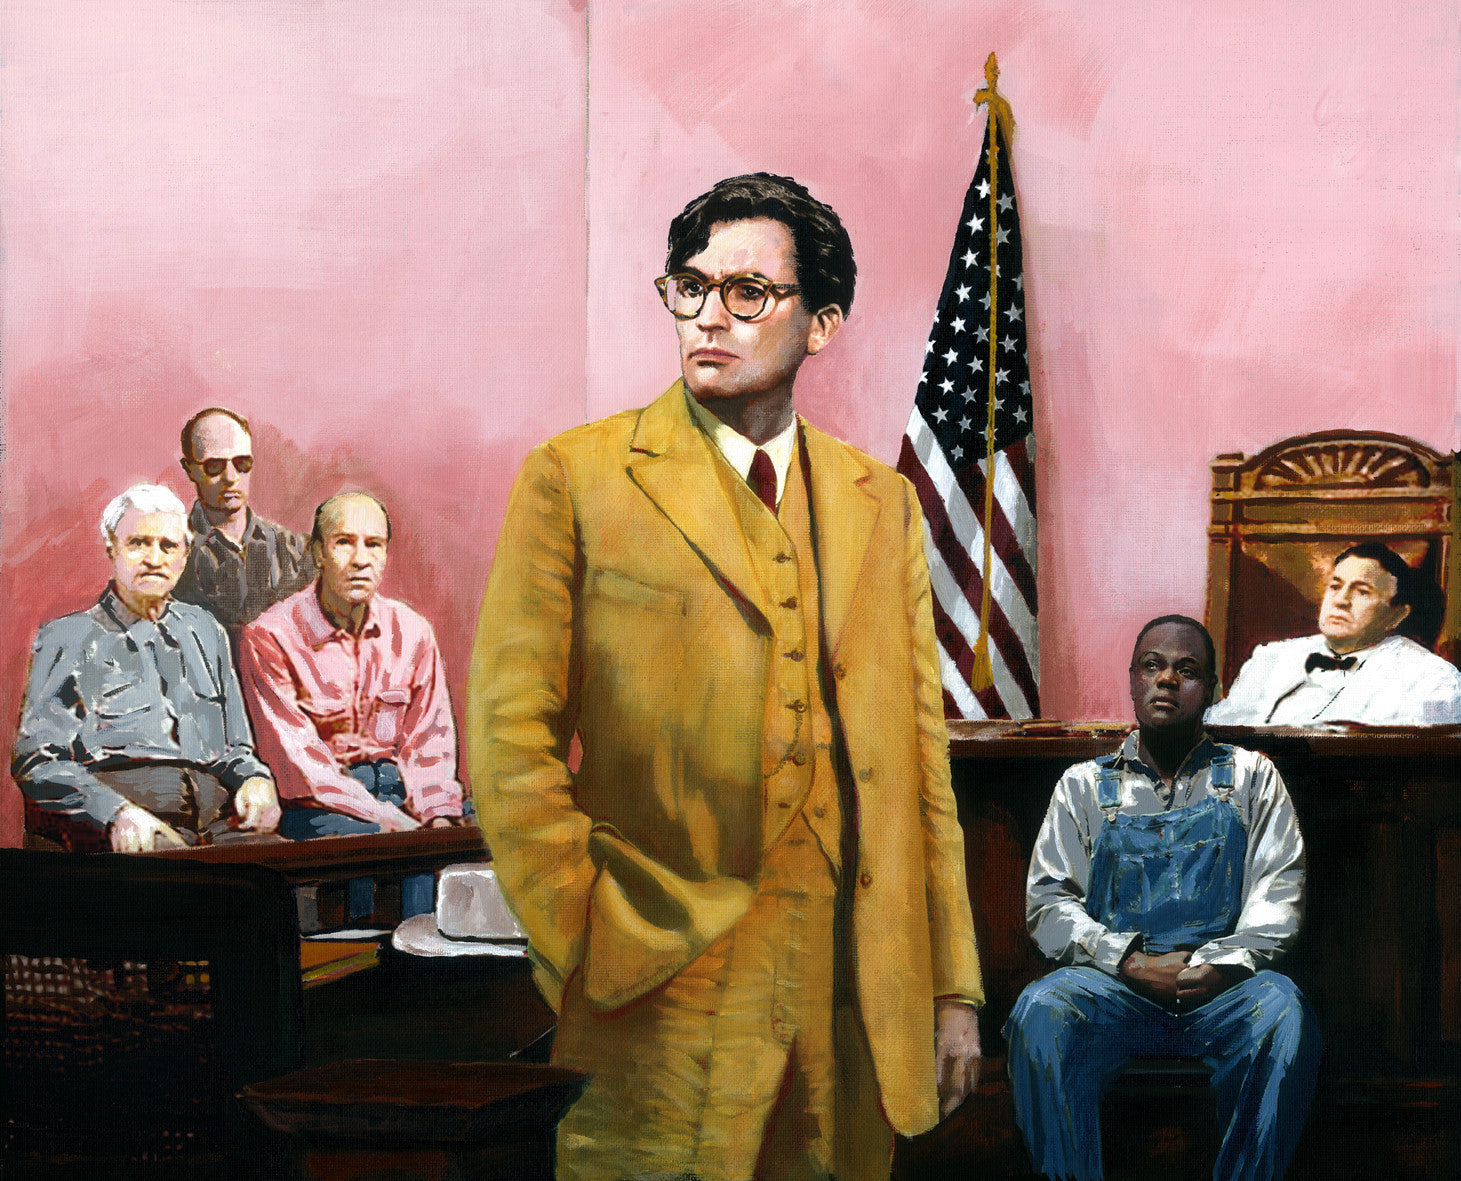 Atticus Finch argues against prejudice and bigotry. By artist Trevor Goring